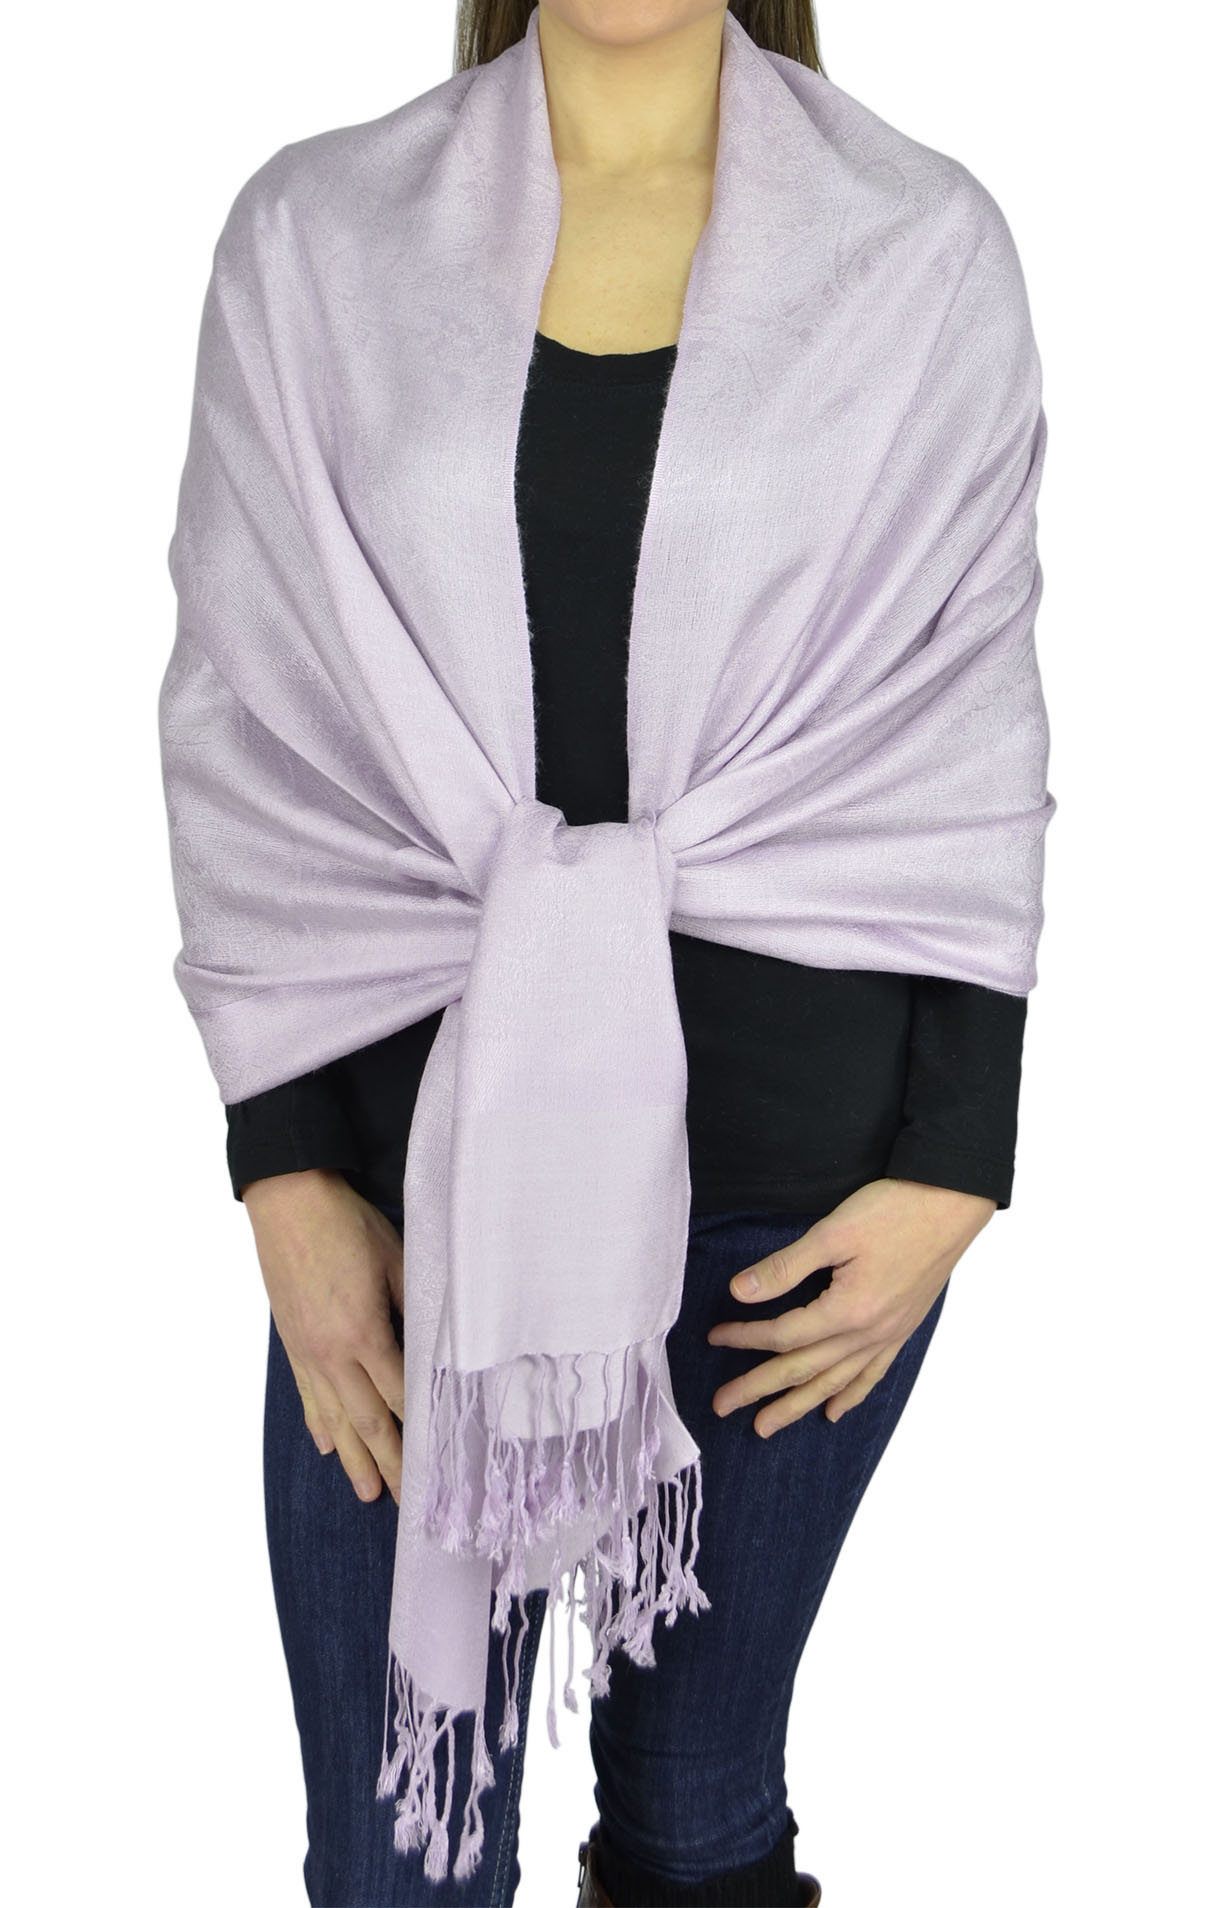 Belle Donne Jacquard Paisley Pashmina Soft Elegant Scarves Wrap Shawl Stole - LtFdPink